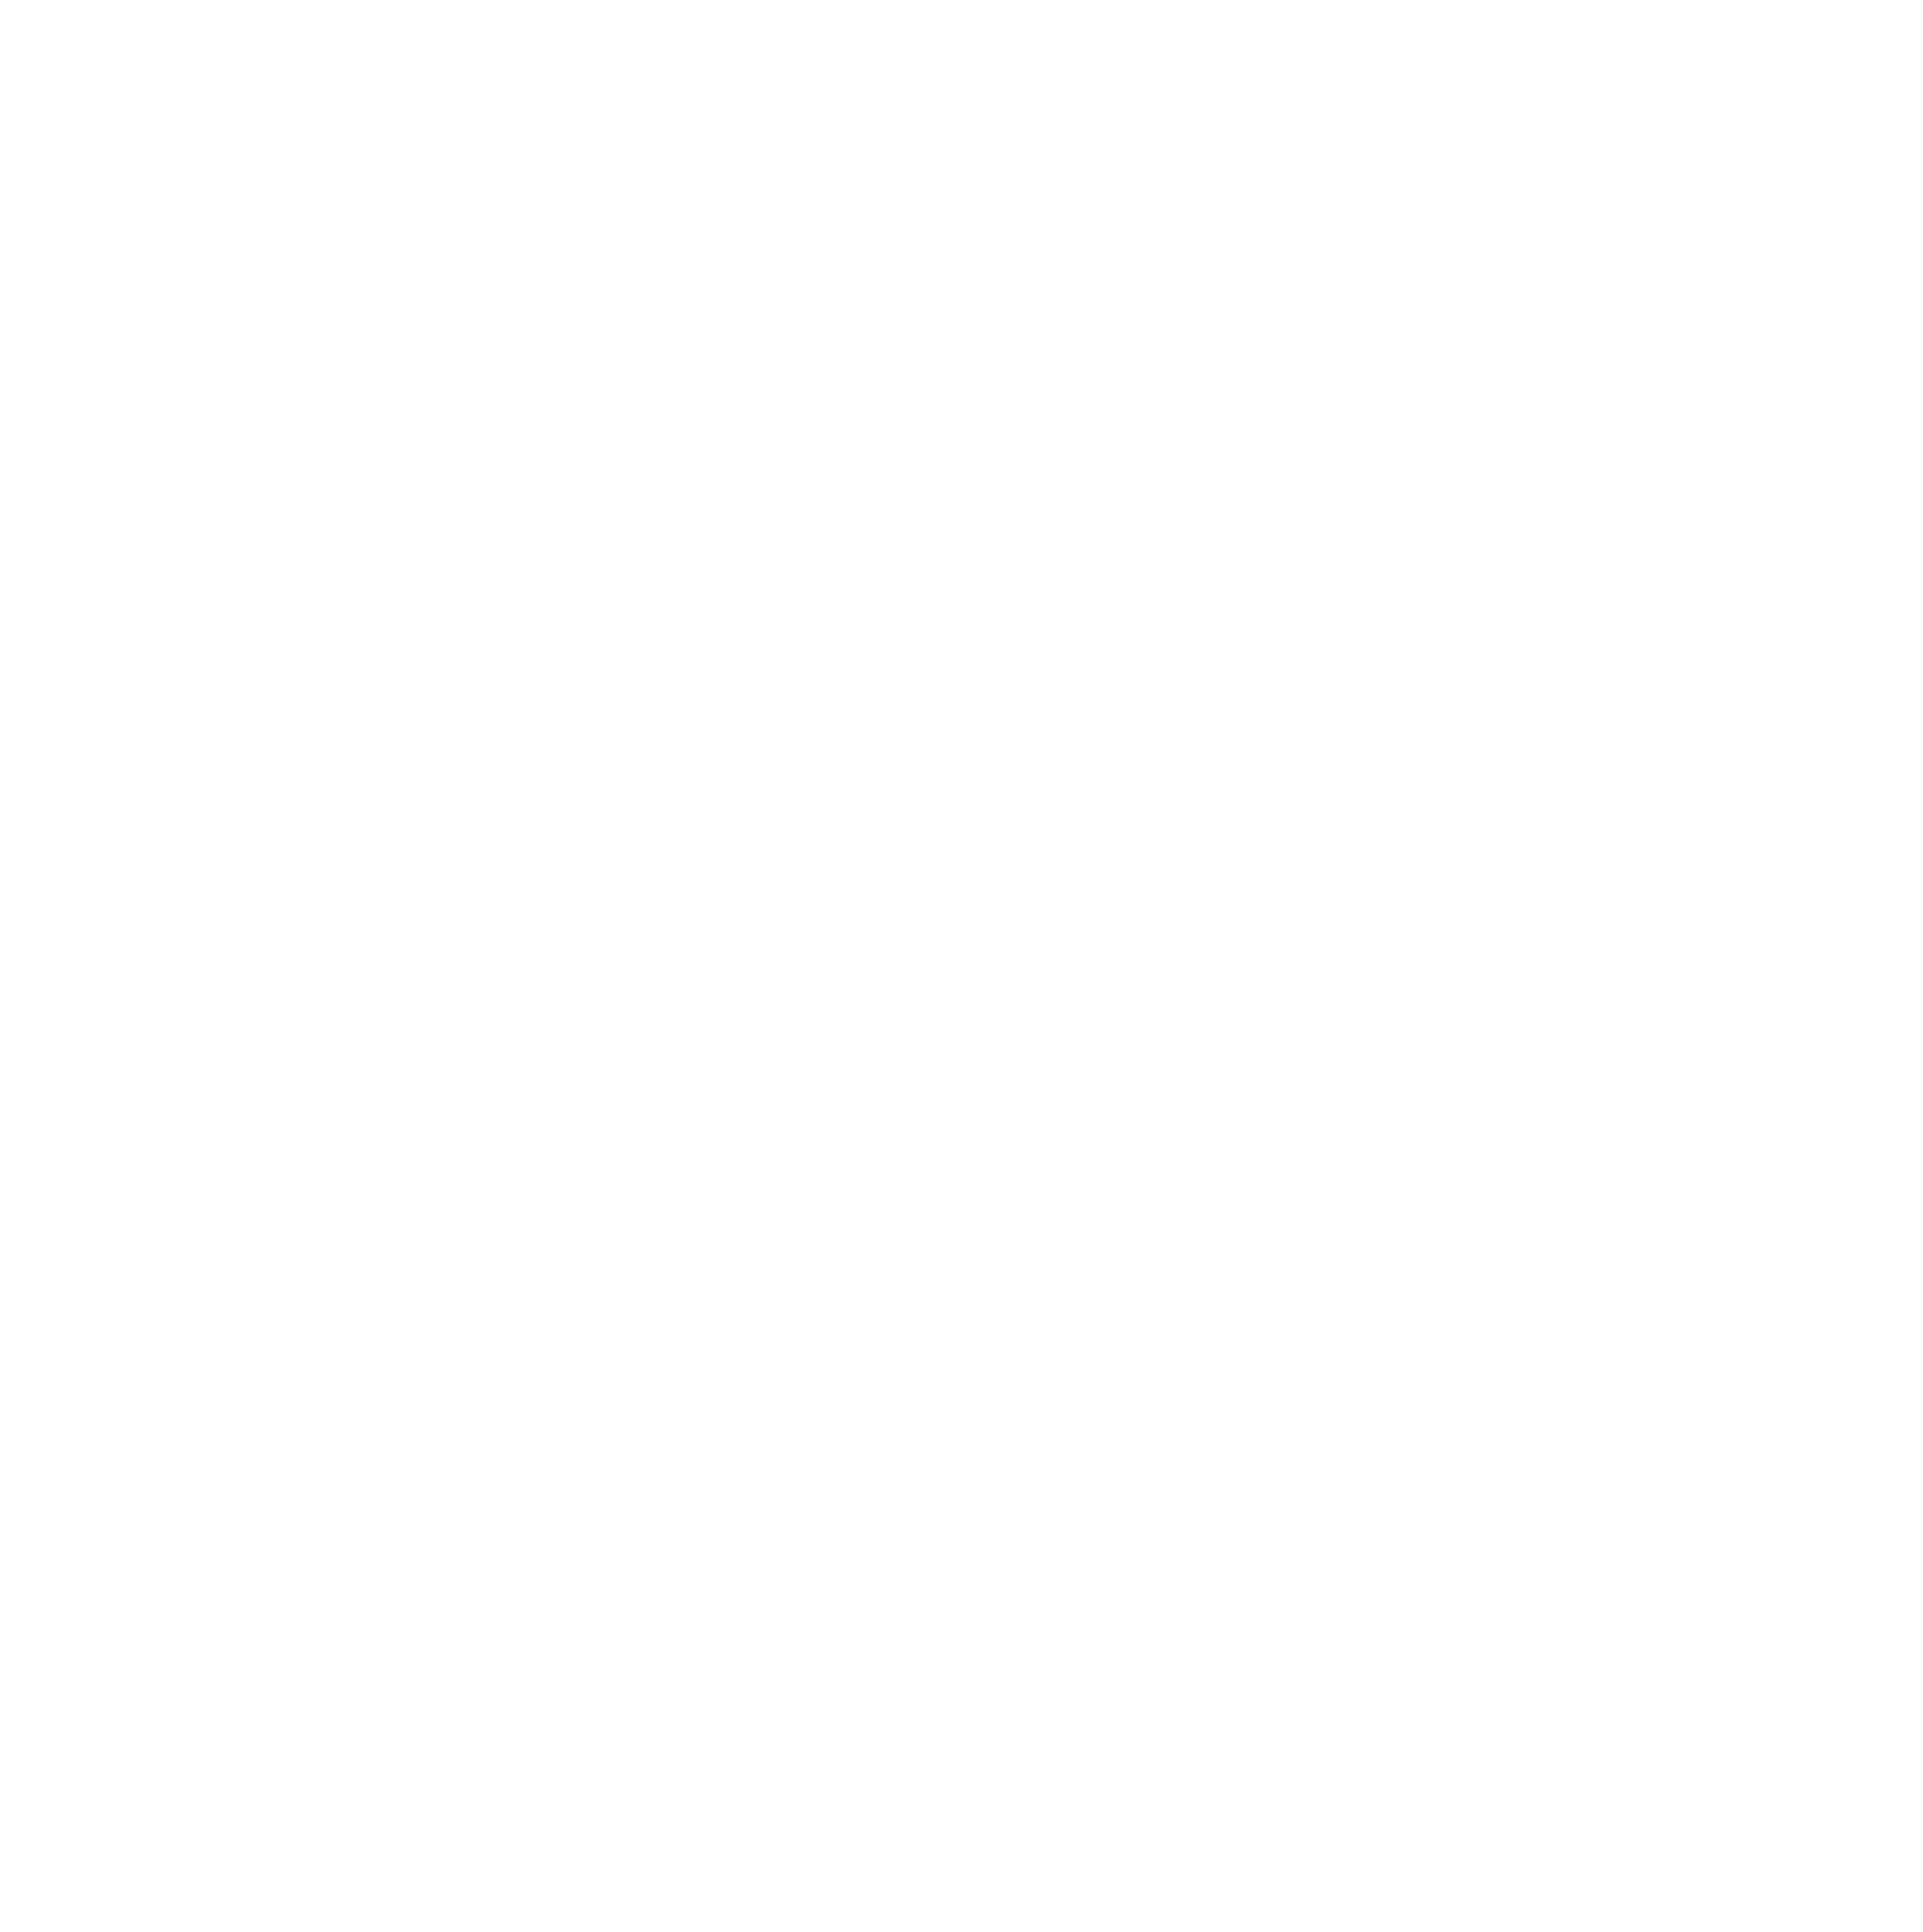 Public Transit Conference